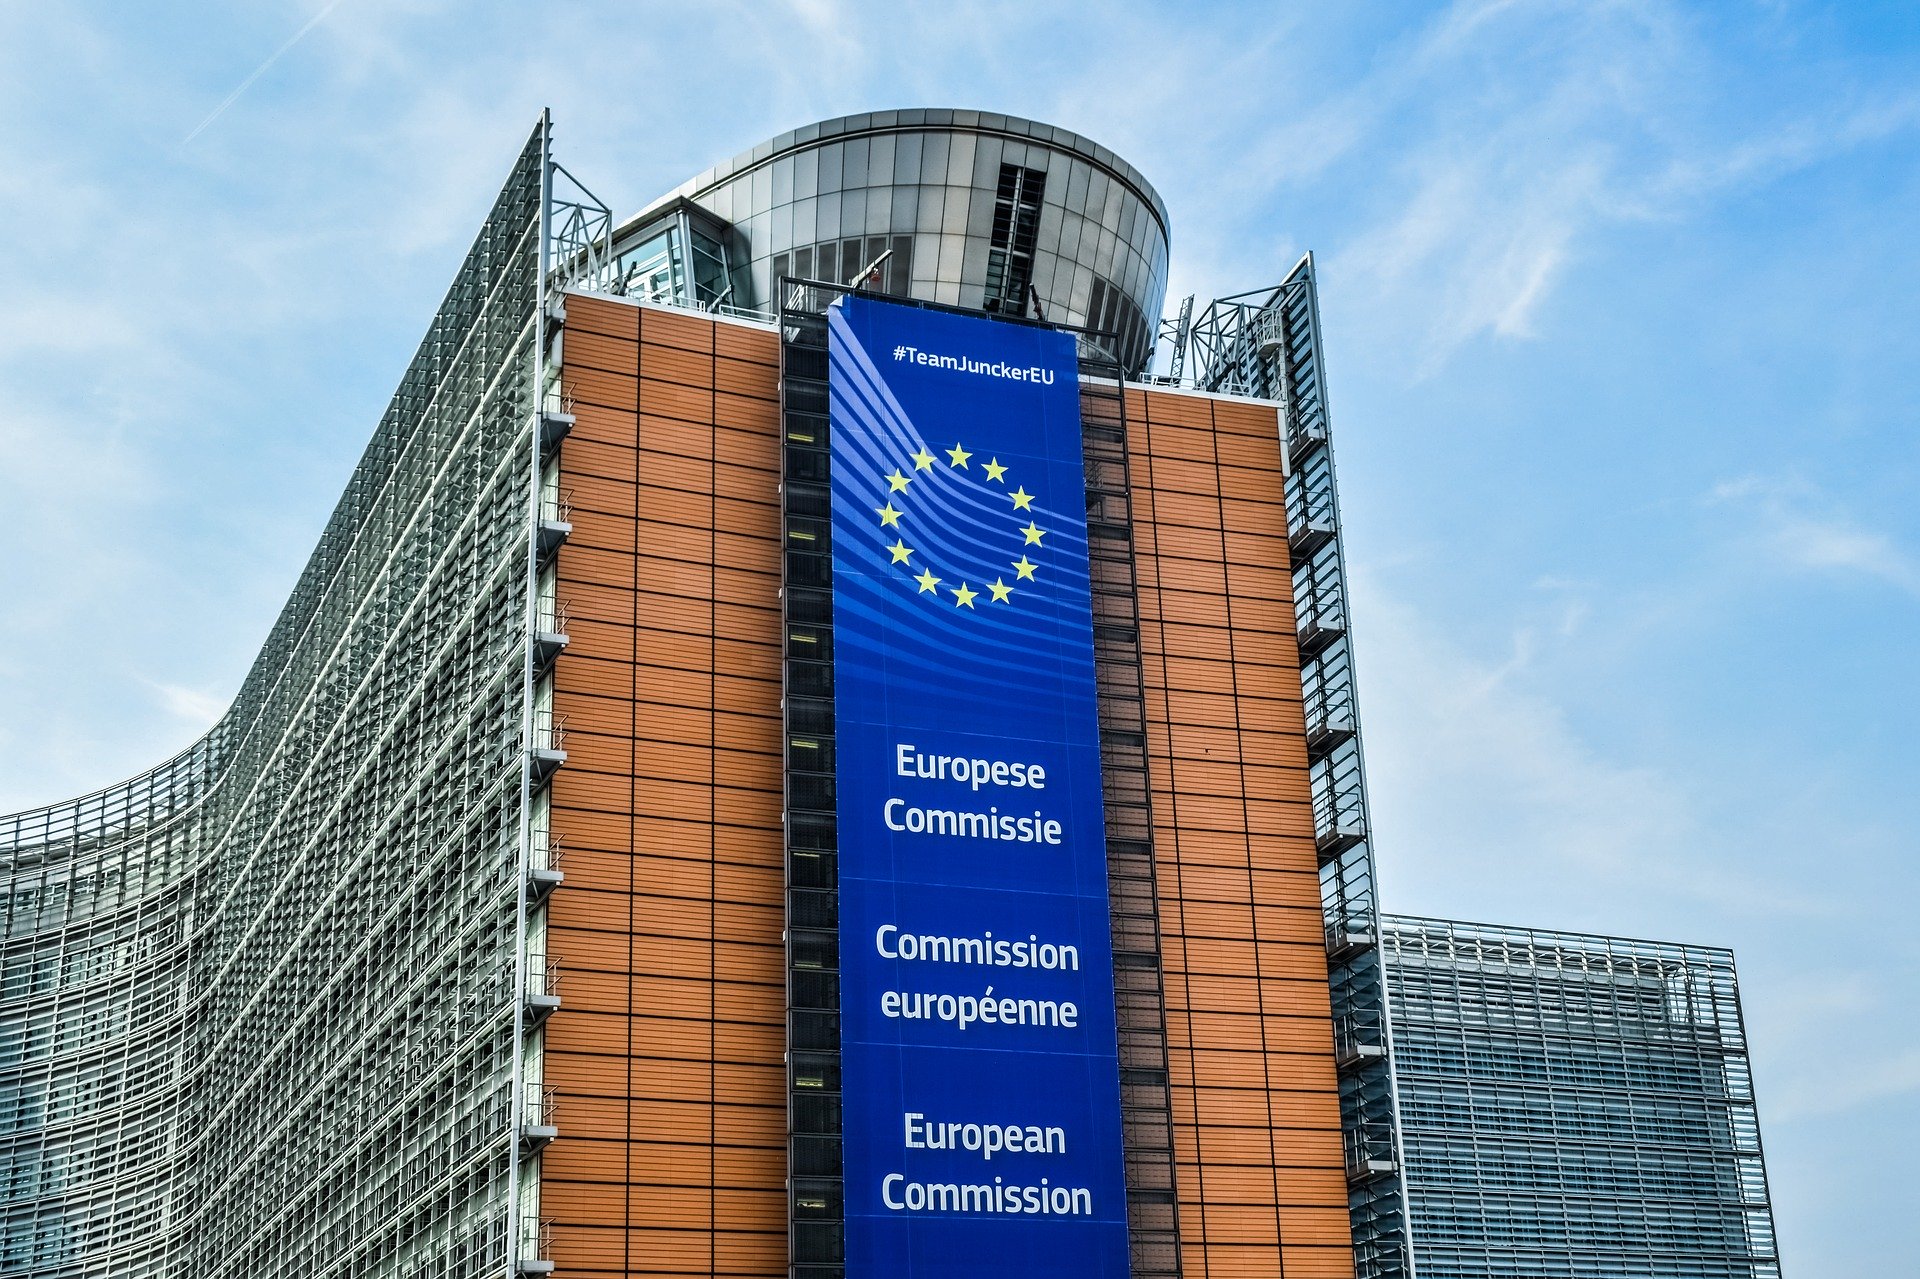 Europese Commissie kondigt nieuwe aanbevelingen toerismesector aan